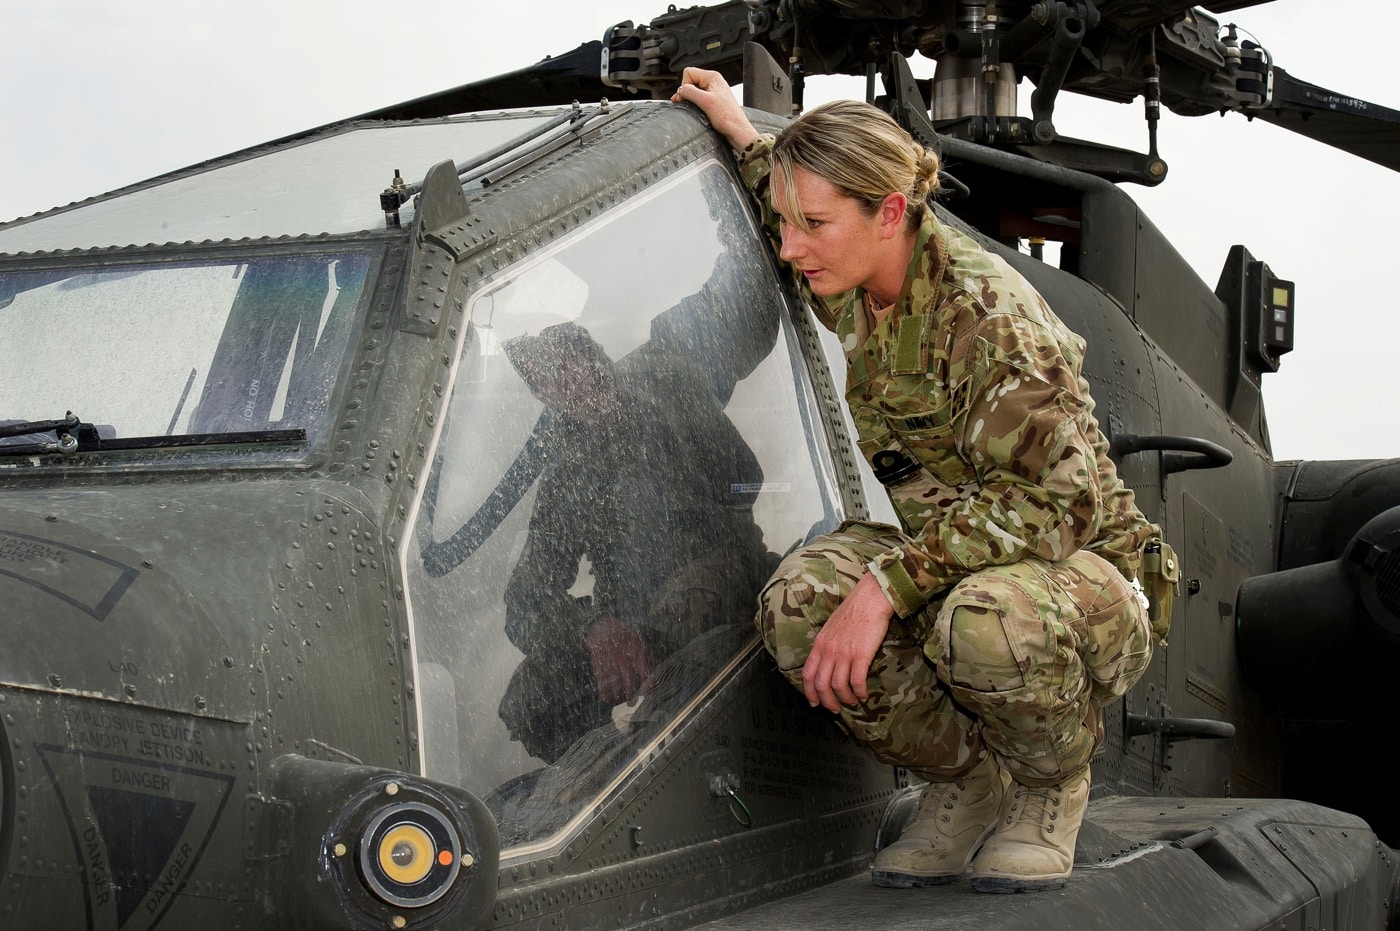 australian navy pilot examines the ah-64 helicopter